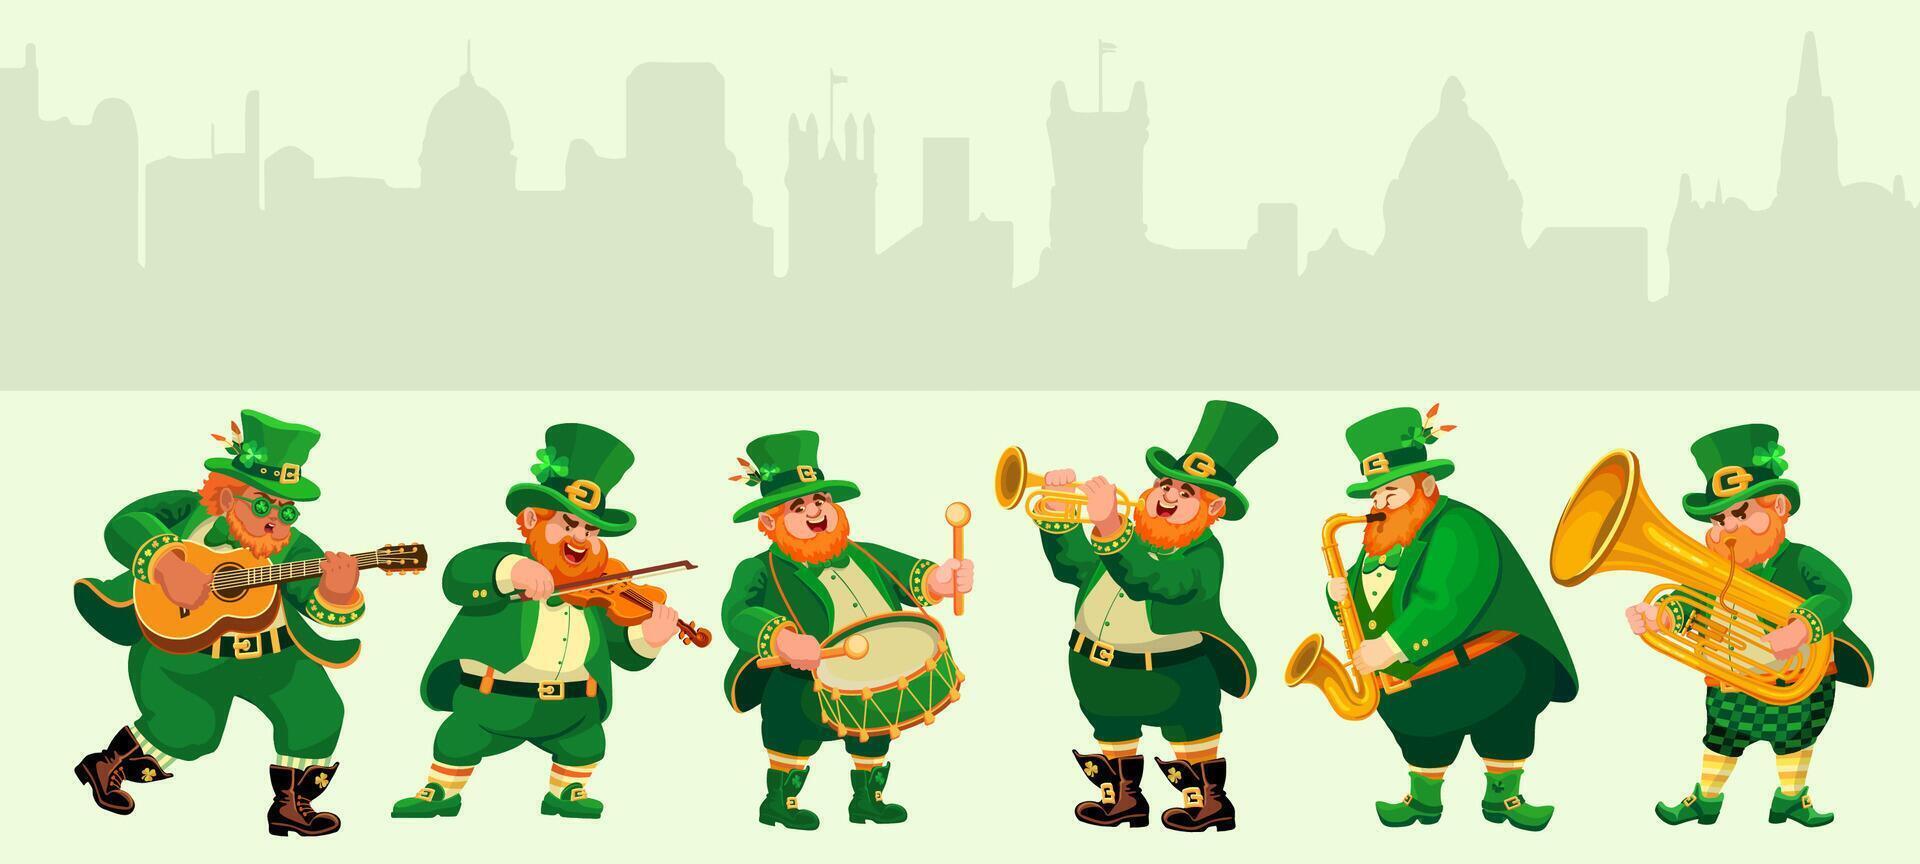 Funny musicians in leprechaun costumes. St. Patricks Day. Vector illustration.